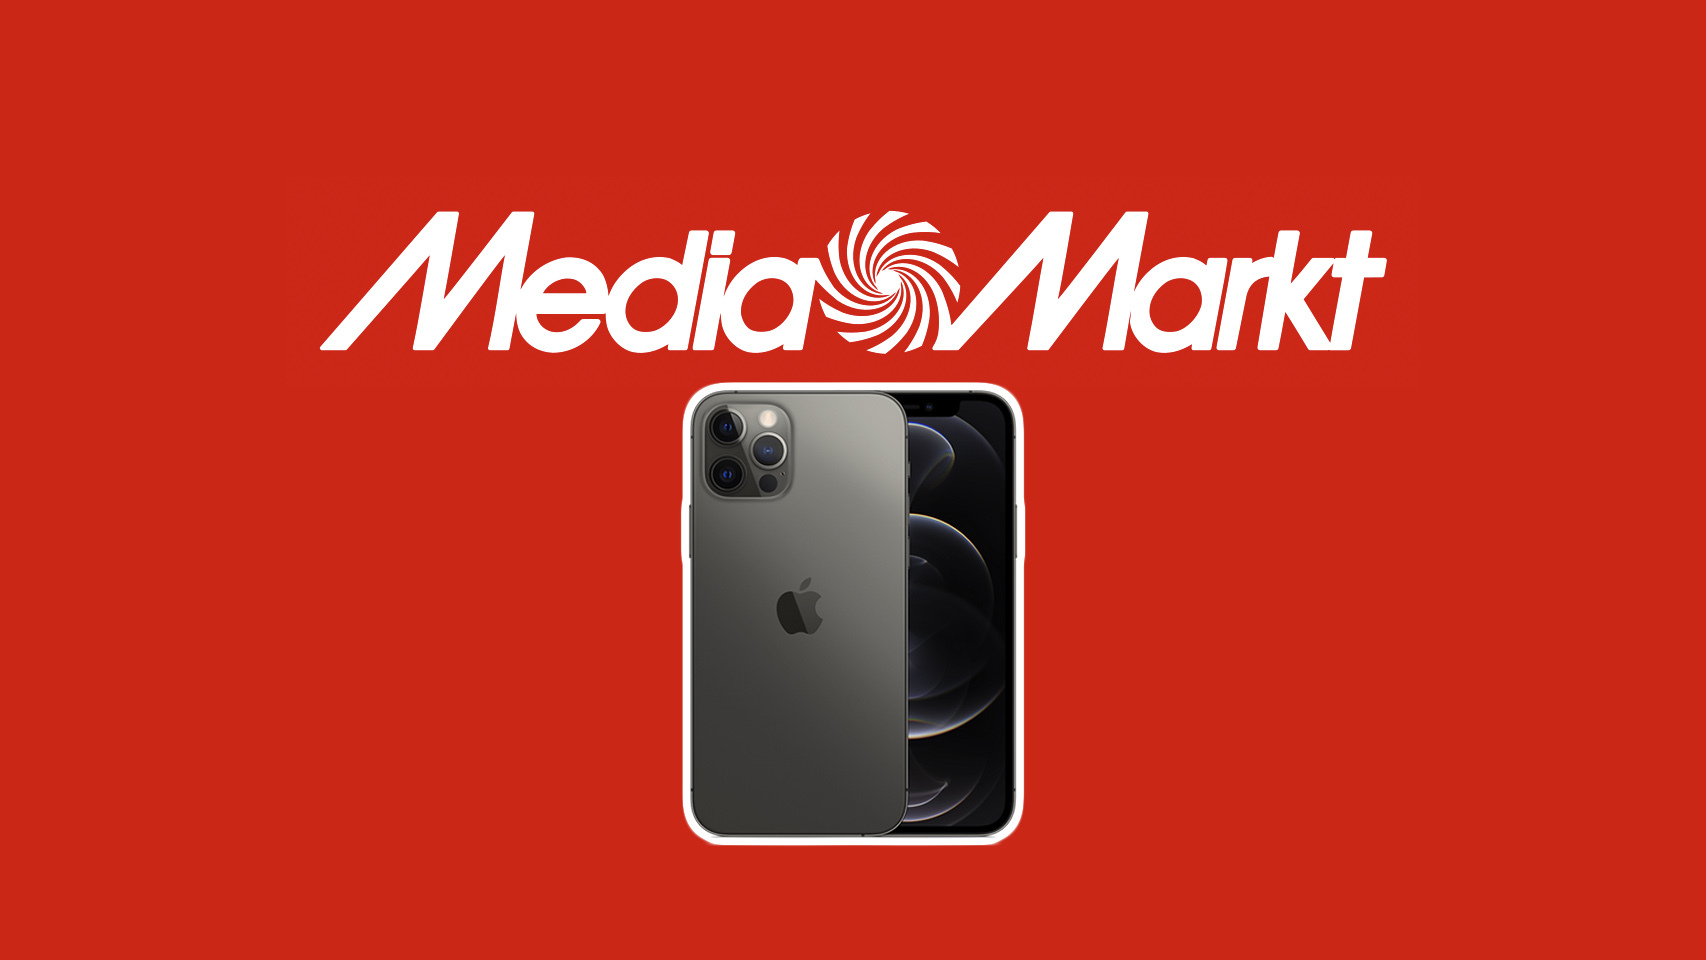 Logo de Media Markt con un iPhone.